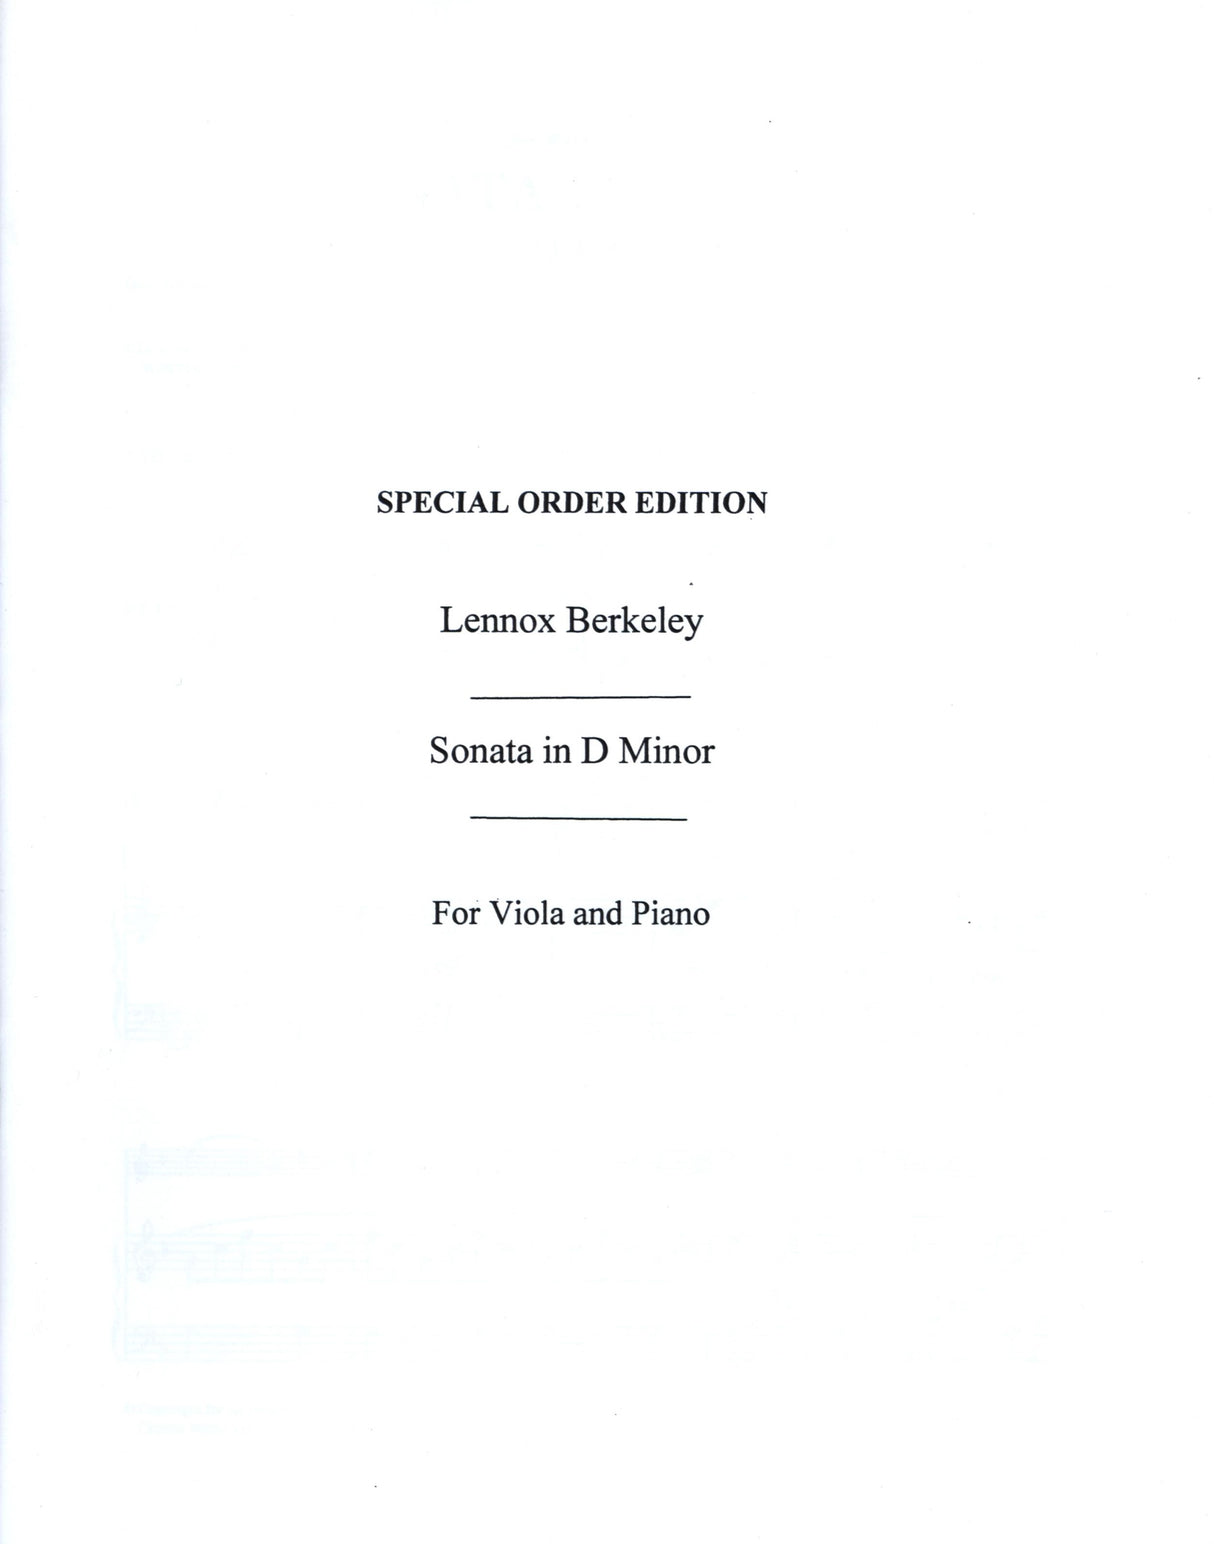 Berkeley: Viola Sonata in D Minor, Op. 22